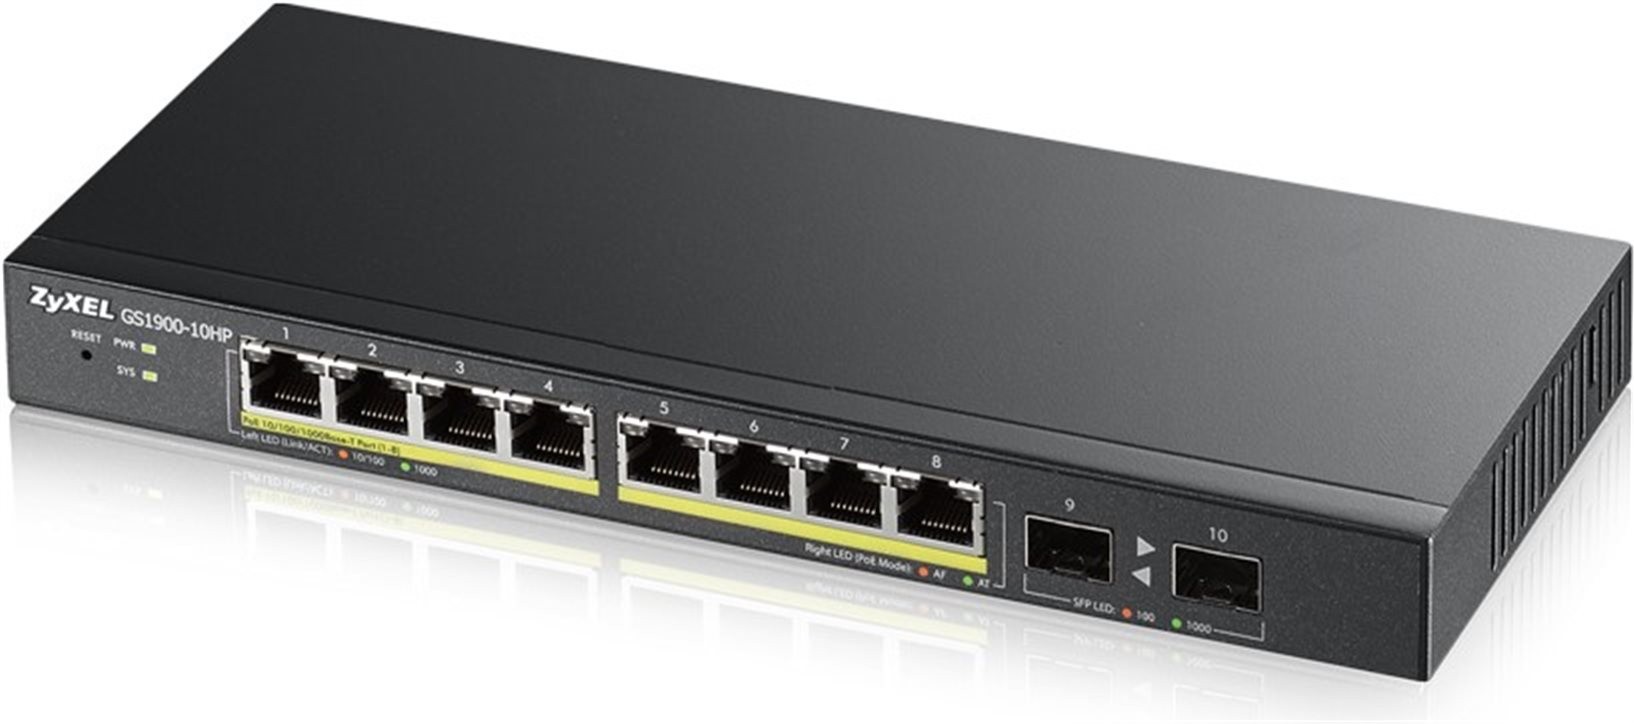 Zyxel GS1900-10HP Managed L2 Gigabit Ethernet (10/100/1000) Power over Ethernet (PoE) Black - GS1900-10HP-EU0102F